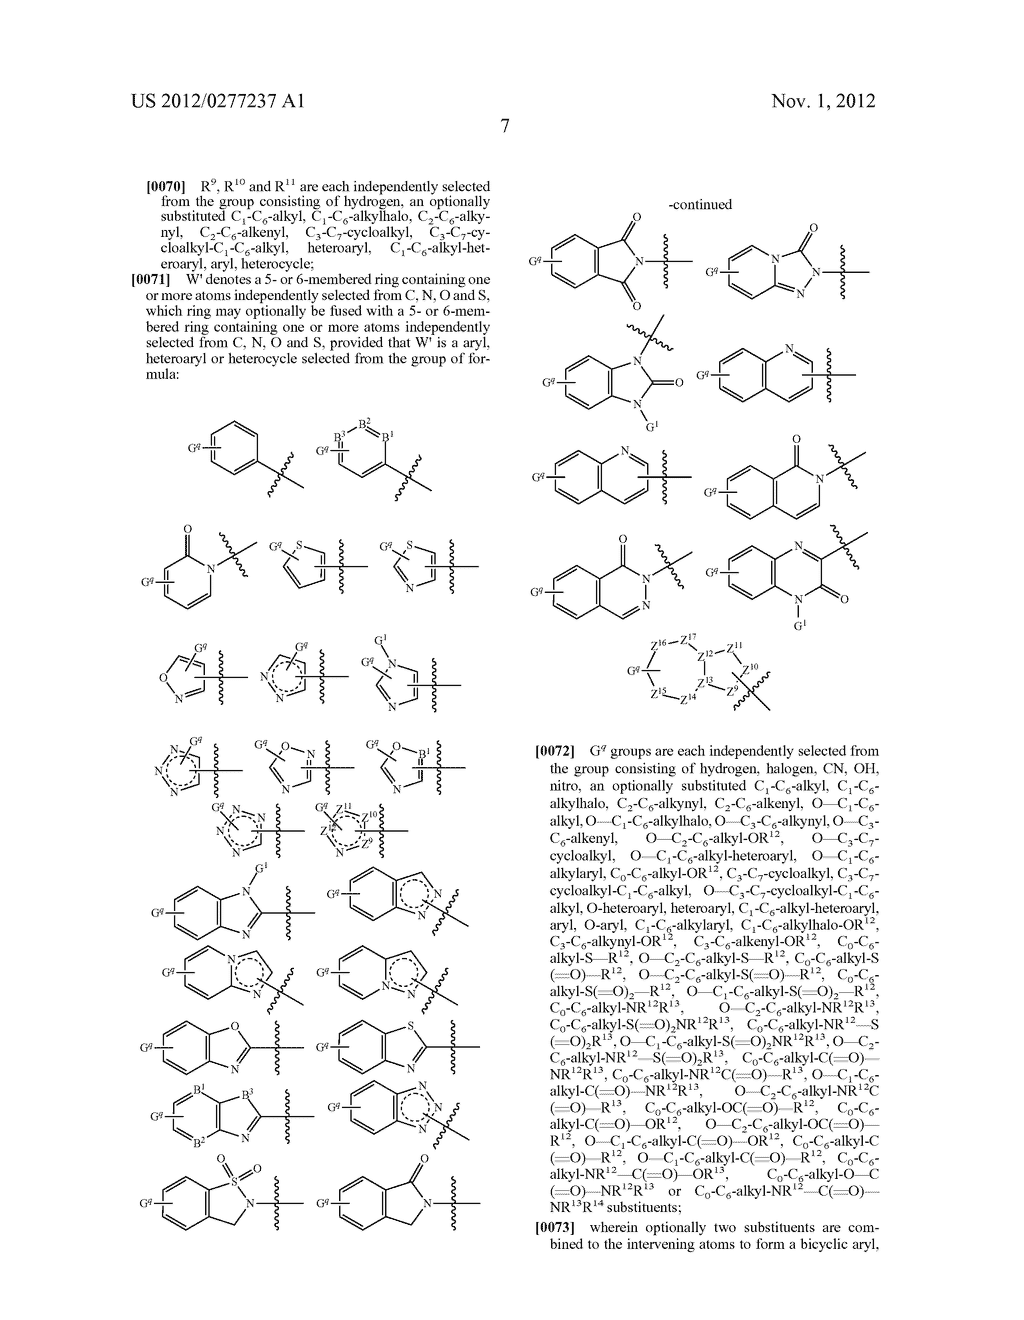 NOVEL ALKYNYL DERIVATIVES AS MODULATORS OF METABOTROPIC GLUTAMATE     RECEPTORS - diagram, schematic, and image 12